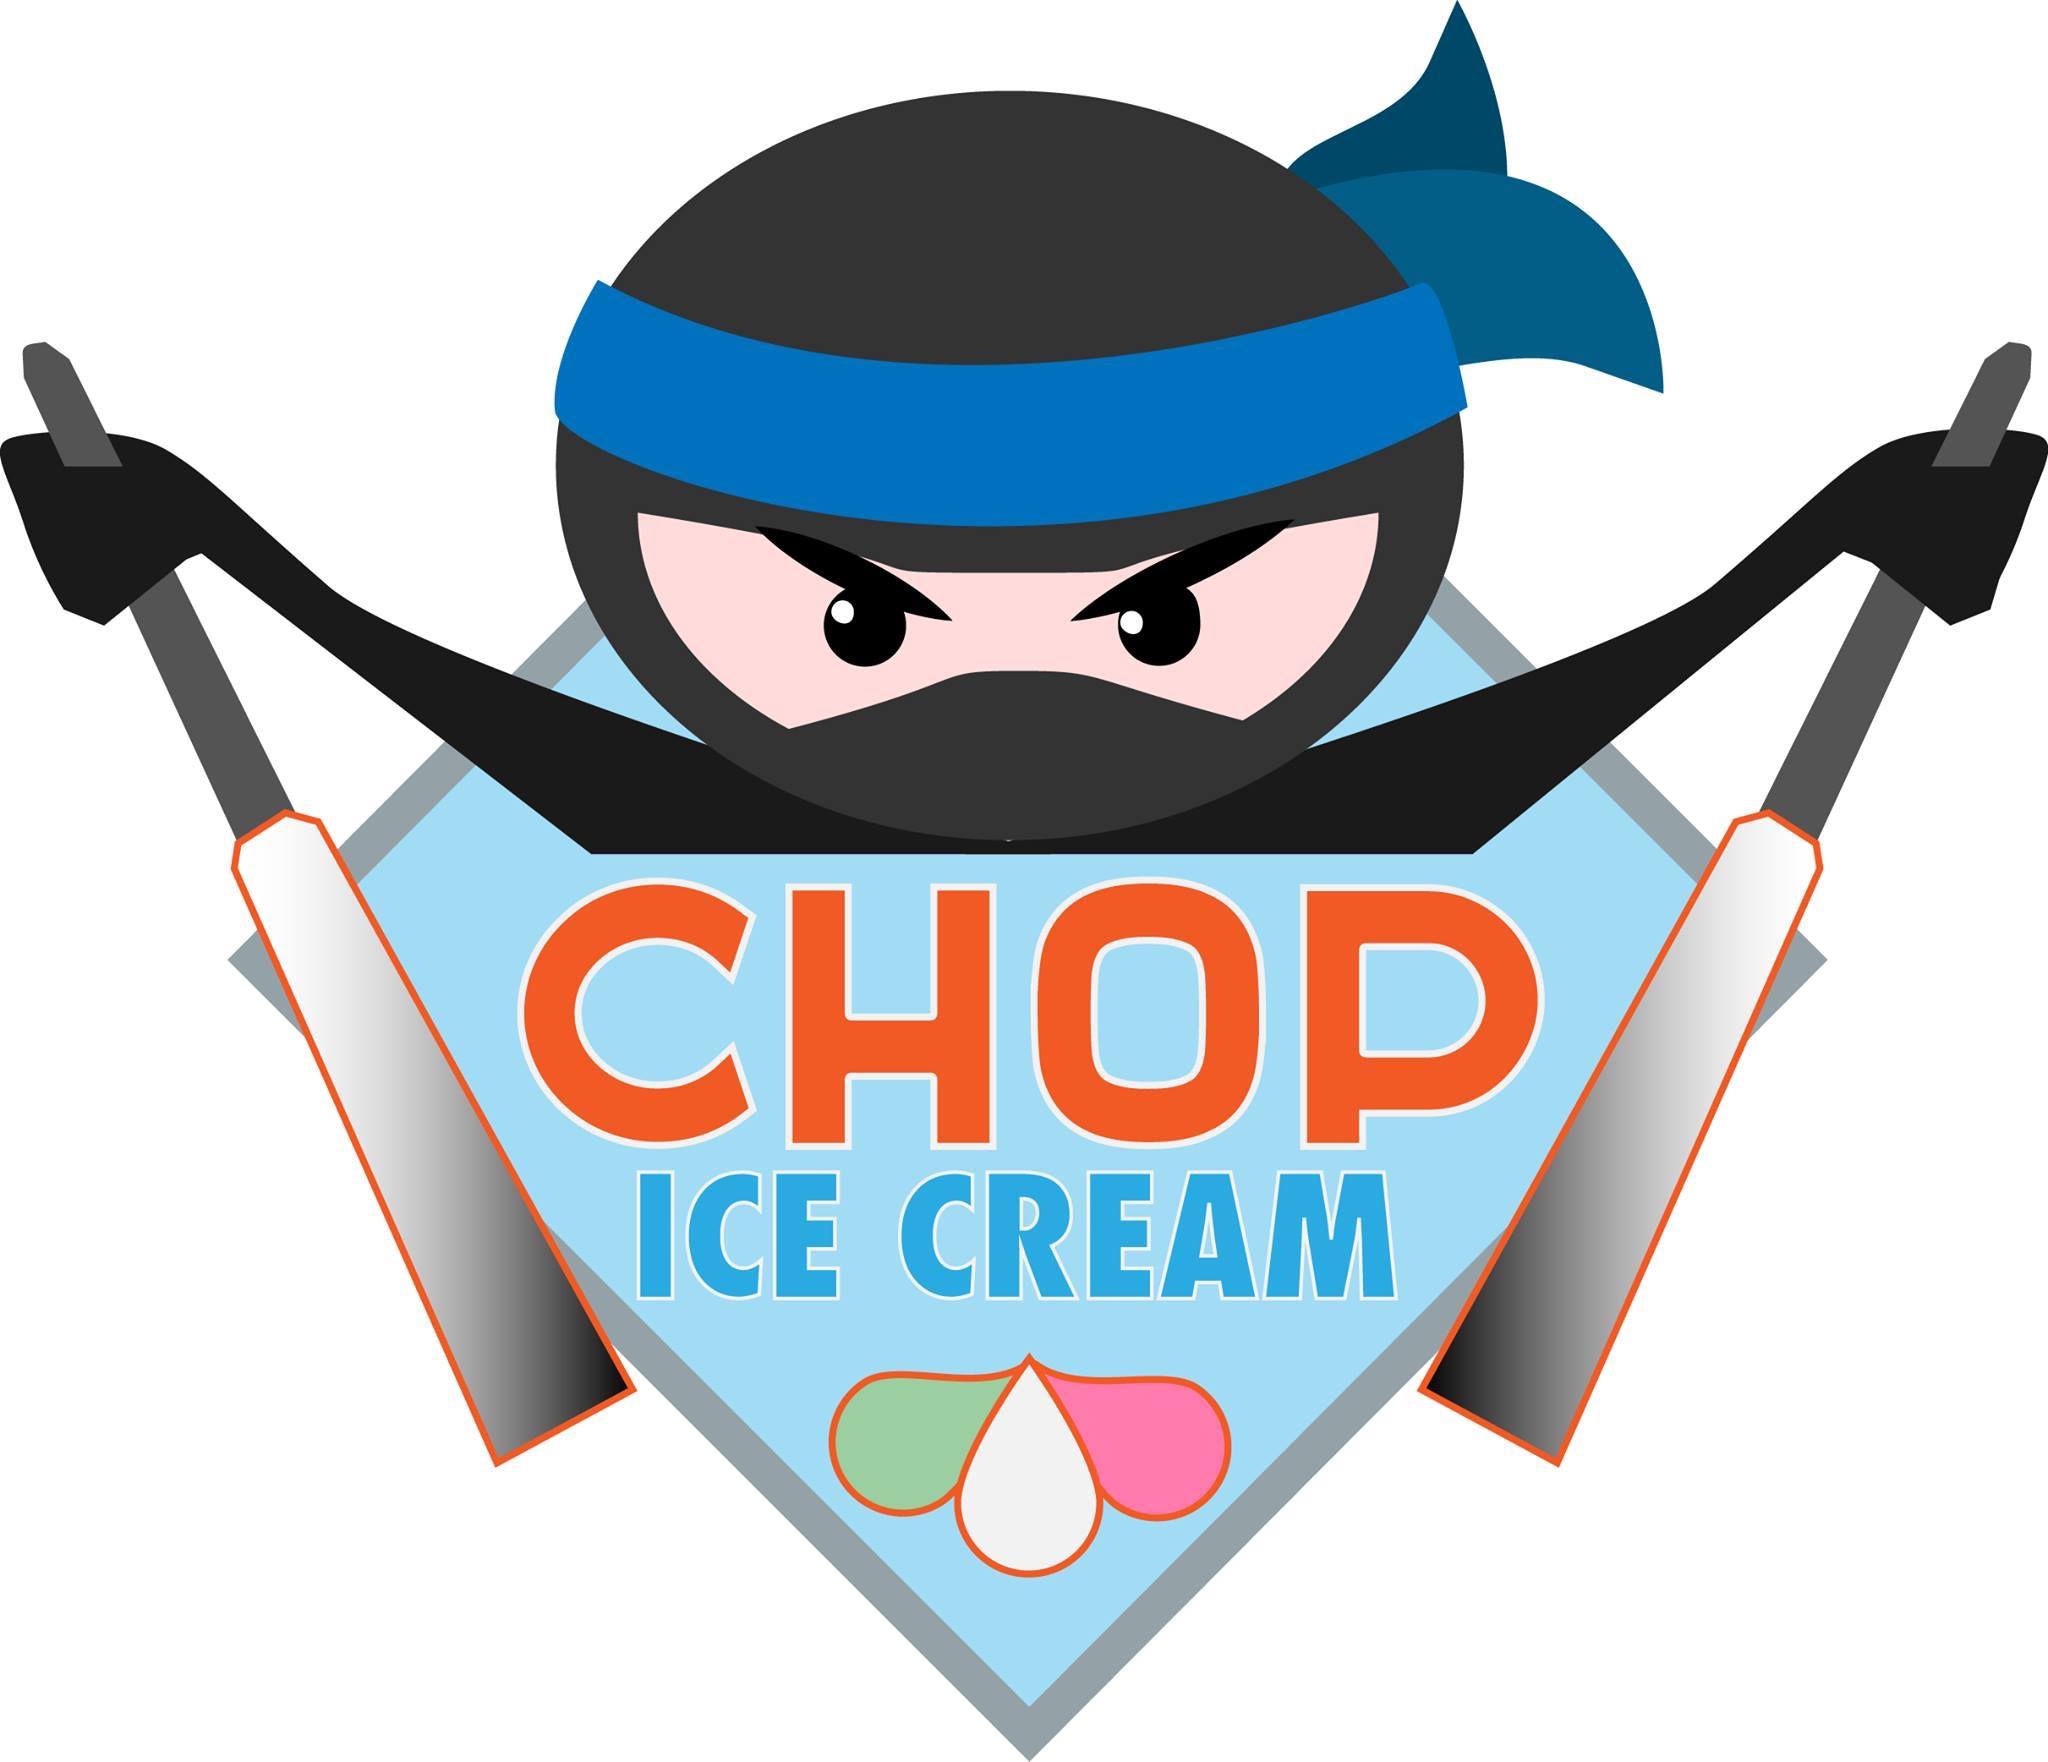 Chop Ice Cream logo